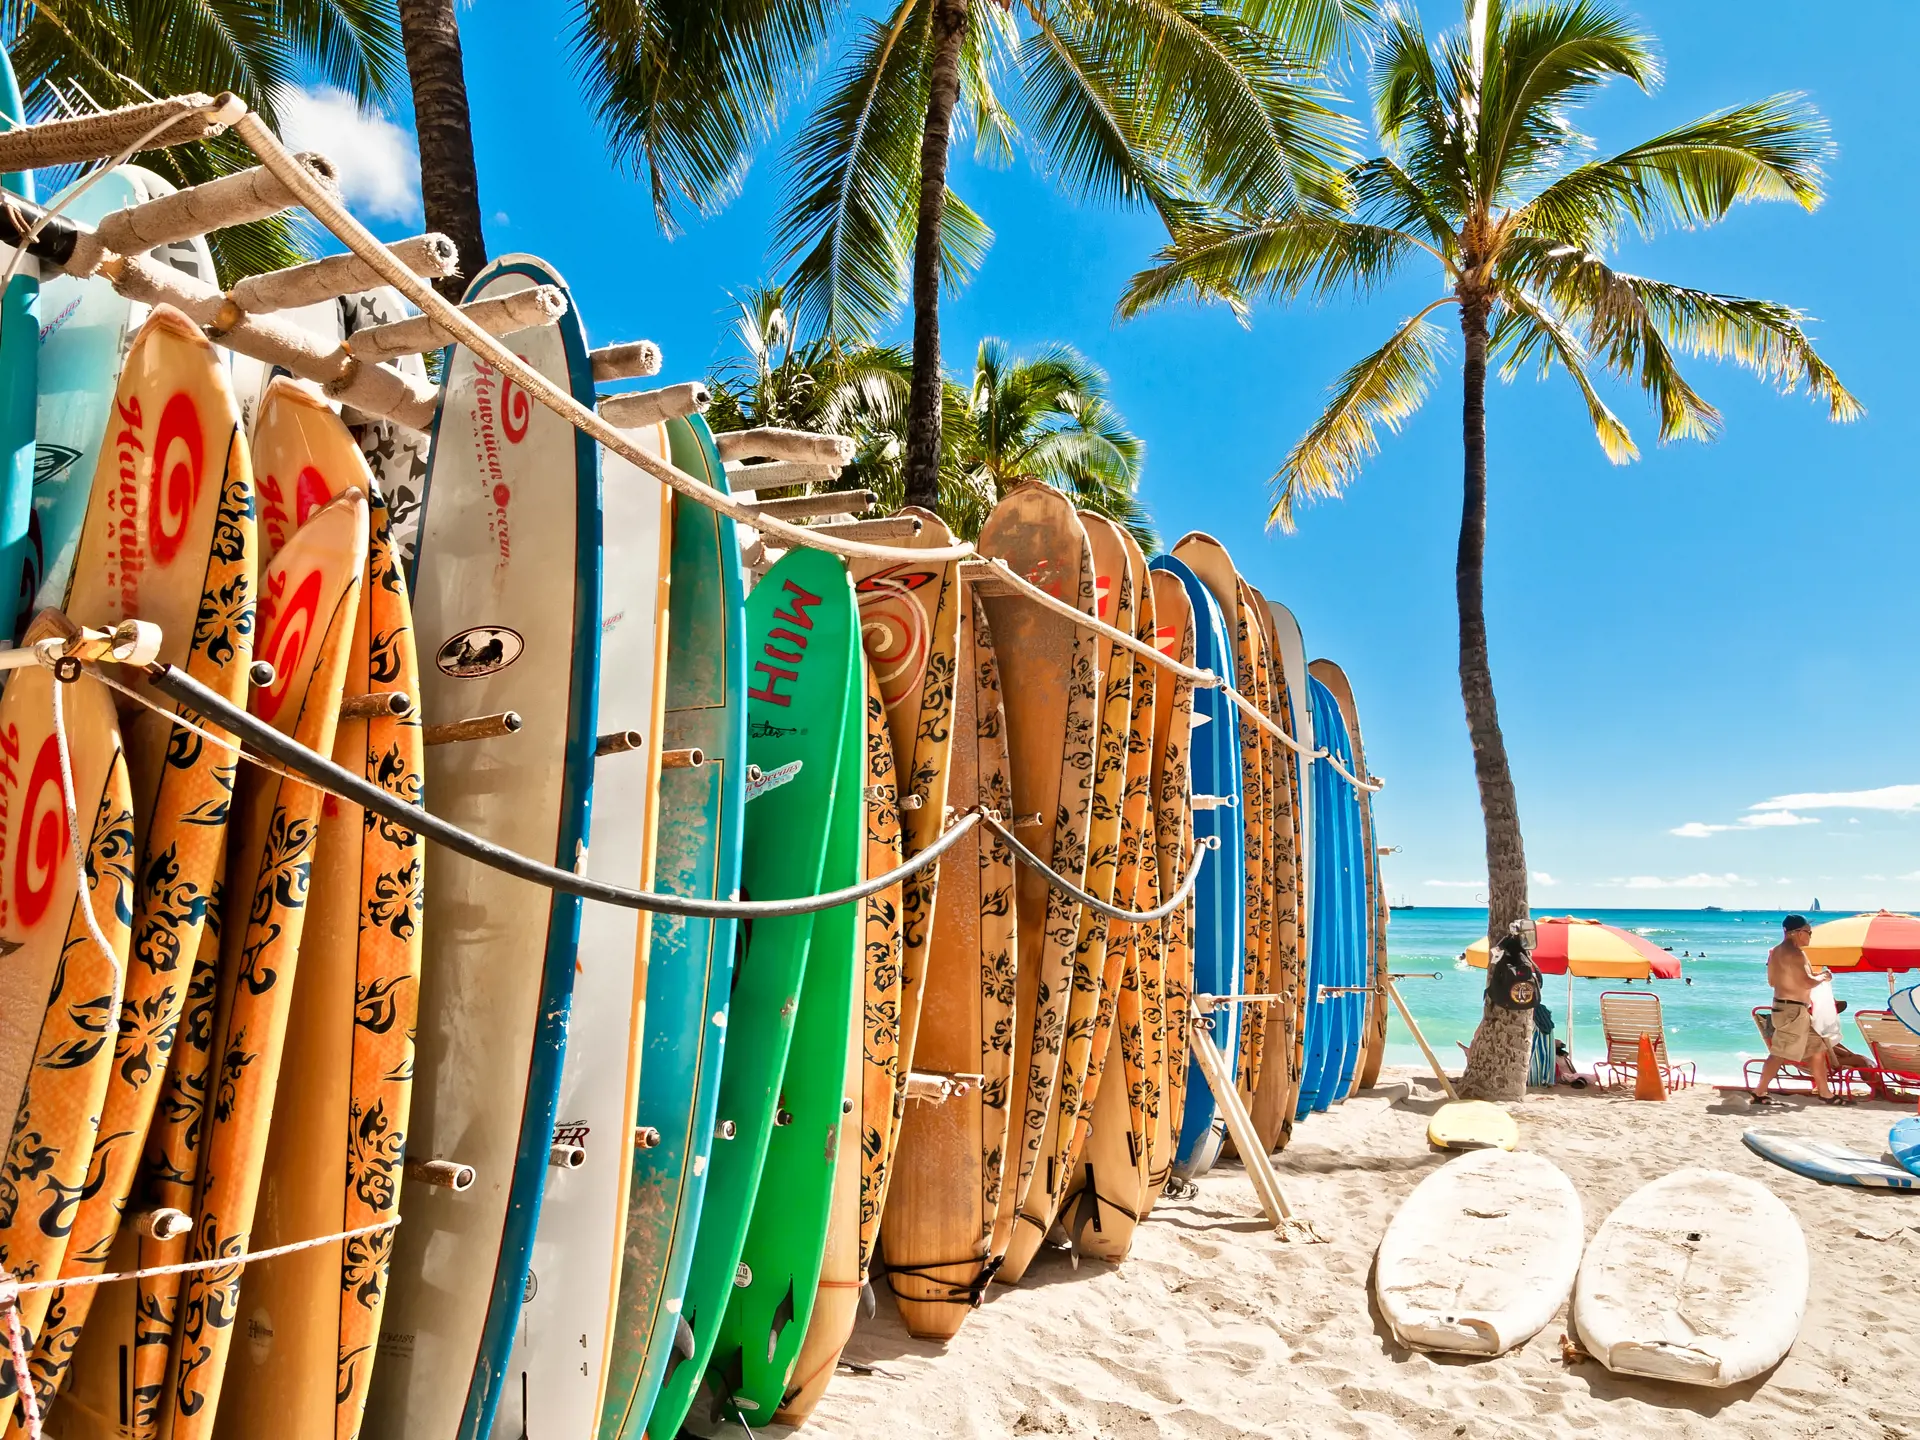 HONOLULU, HAWAII - SEPTEMBER 7, 2013 Surfboards lined up in the rack at famous Waikiki Beach in Honolulu. Oahu, Hawaii.jpg